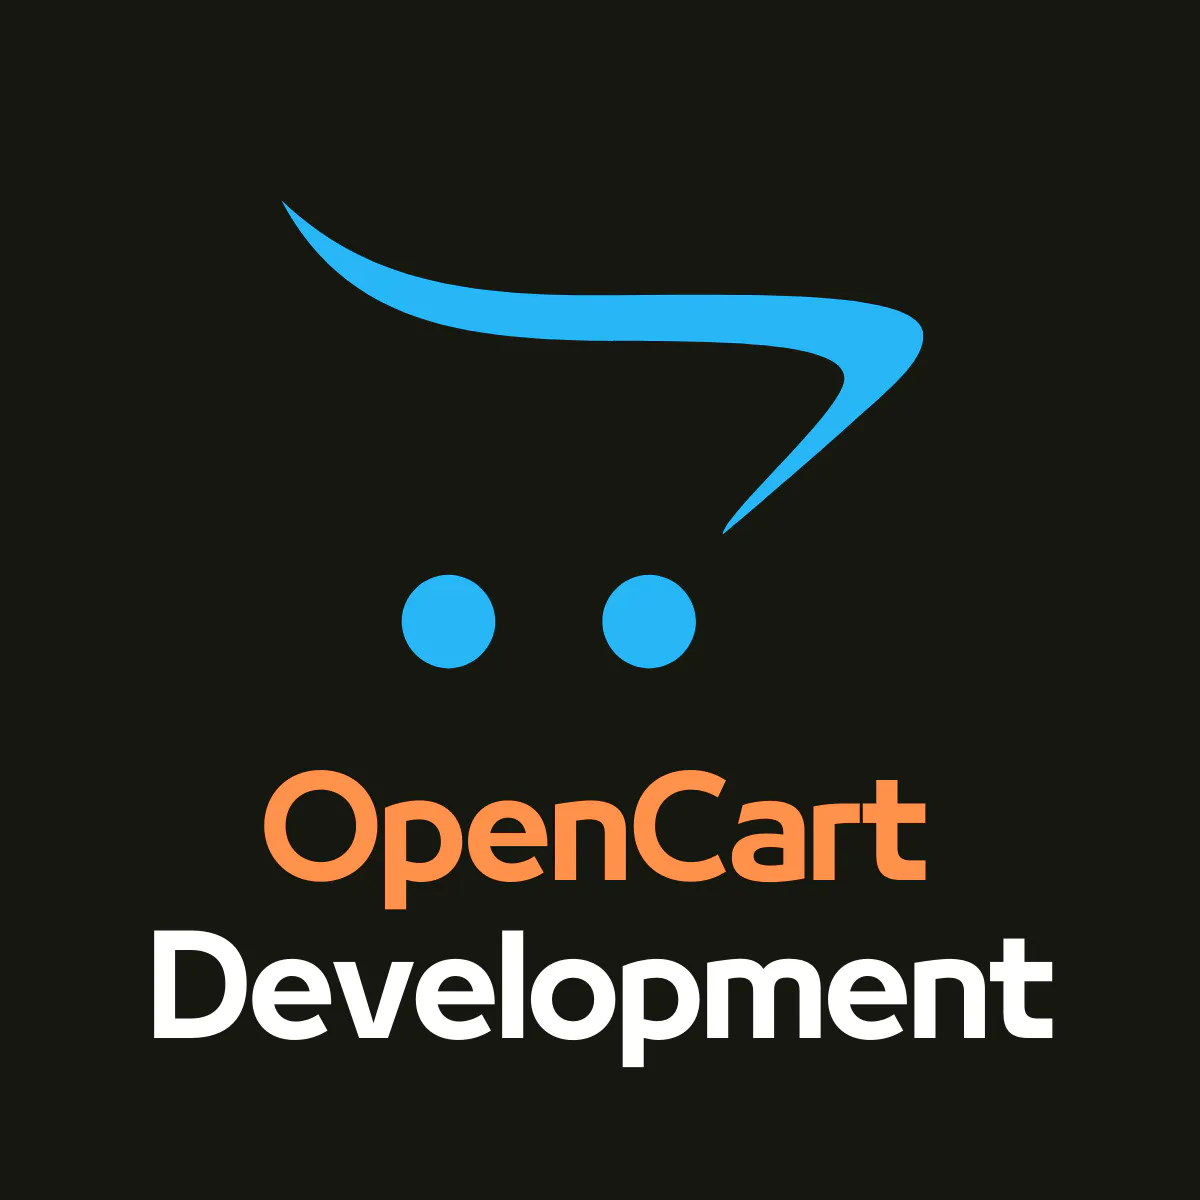 OpenCart Developer in India